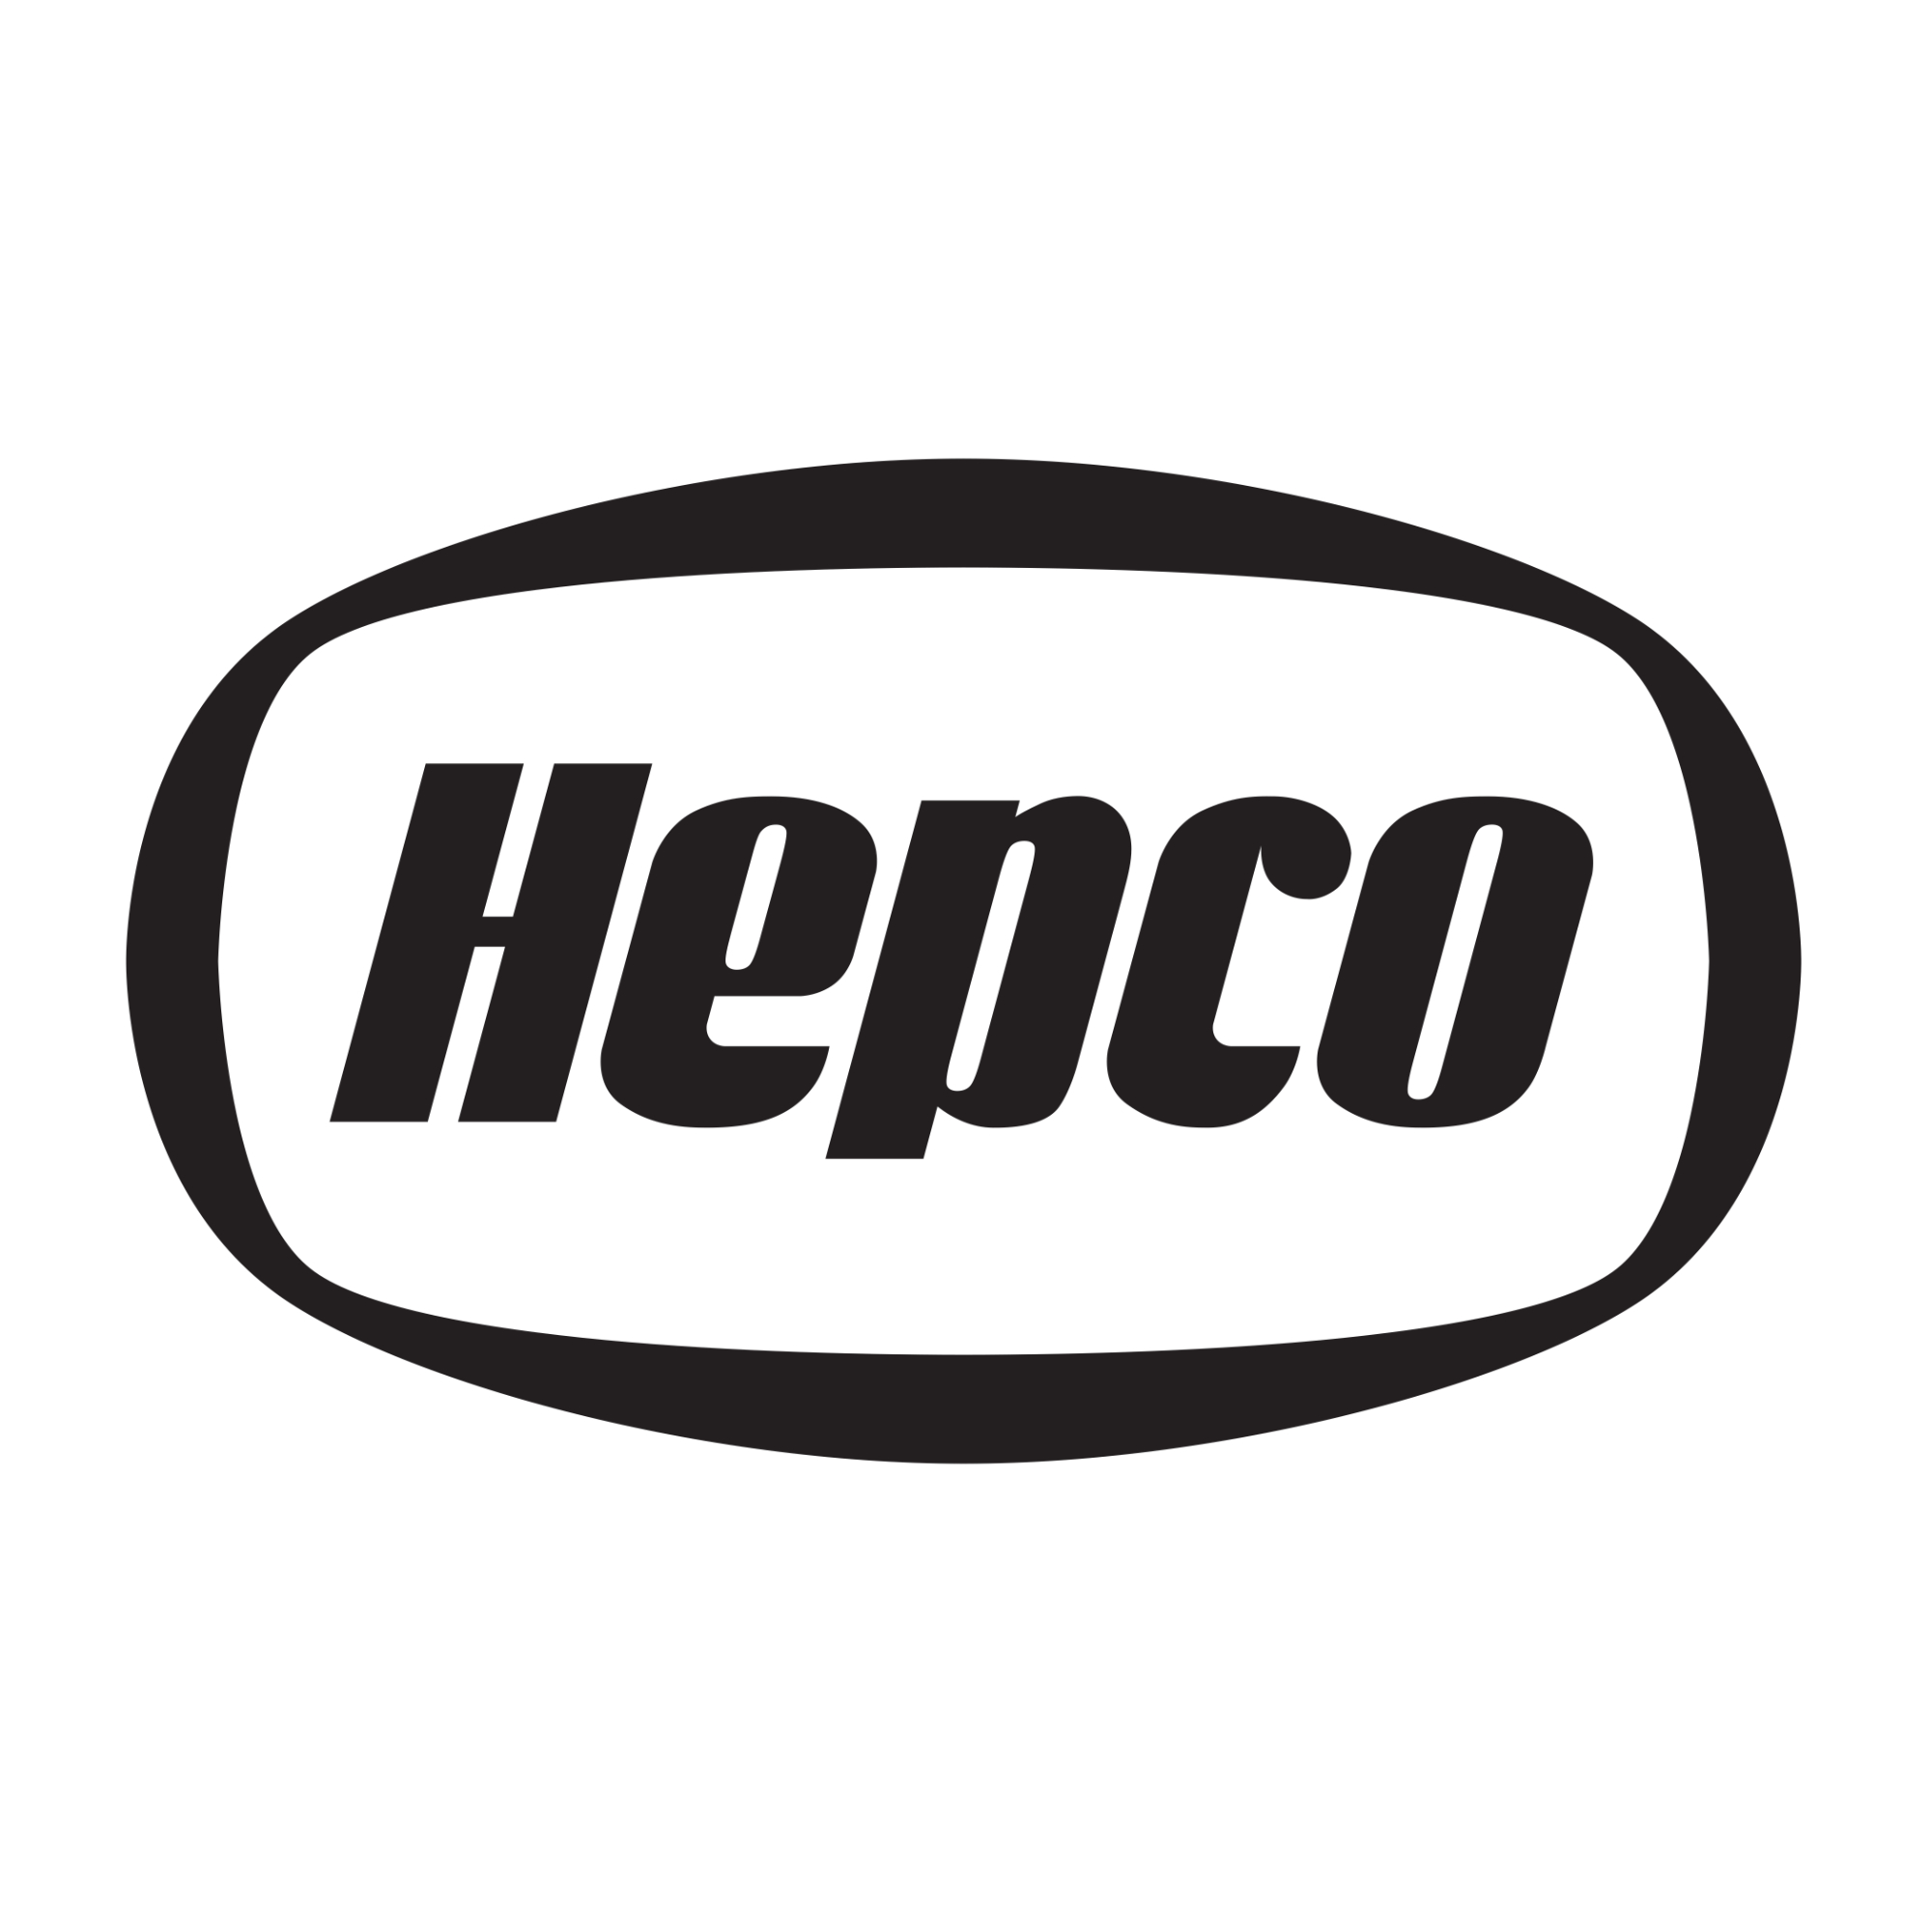 Das Logo der Hepco Manufaktur